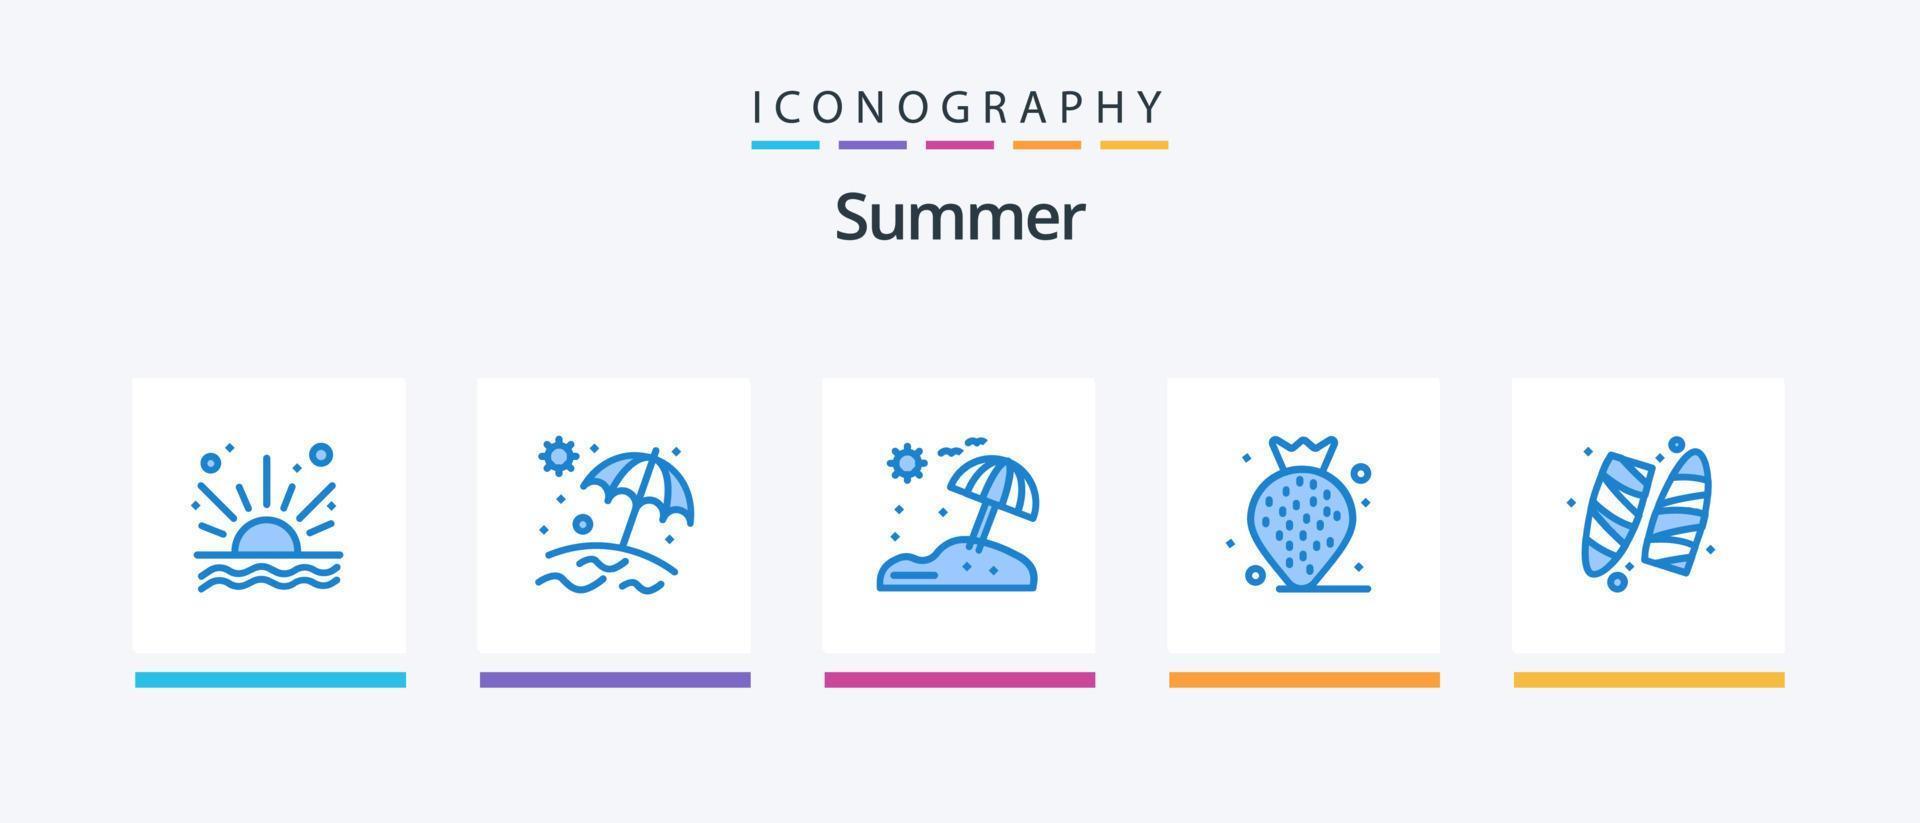 sommar blå 5 ikon packa Inklusive . jordgubbe. surfbräda. kreativ ikoner design vektor